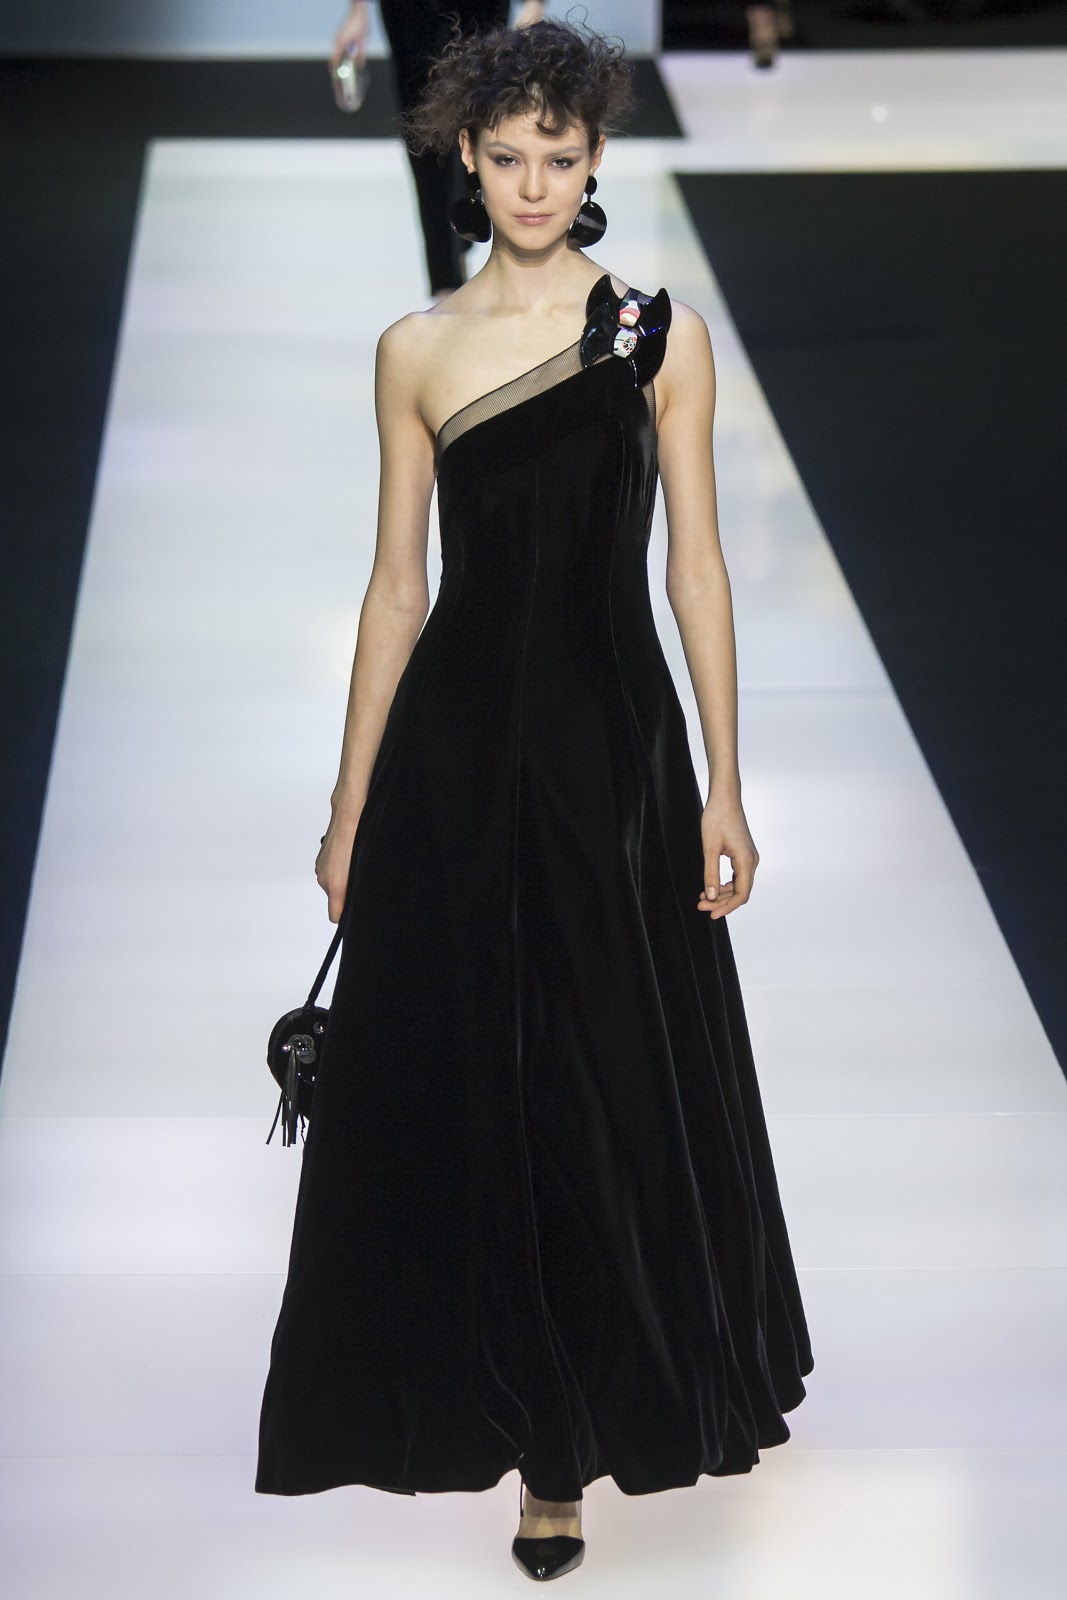 Fashion Runway | 'Black Velvet', the new Giorgio Armani Women’s Fall ...